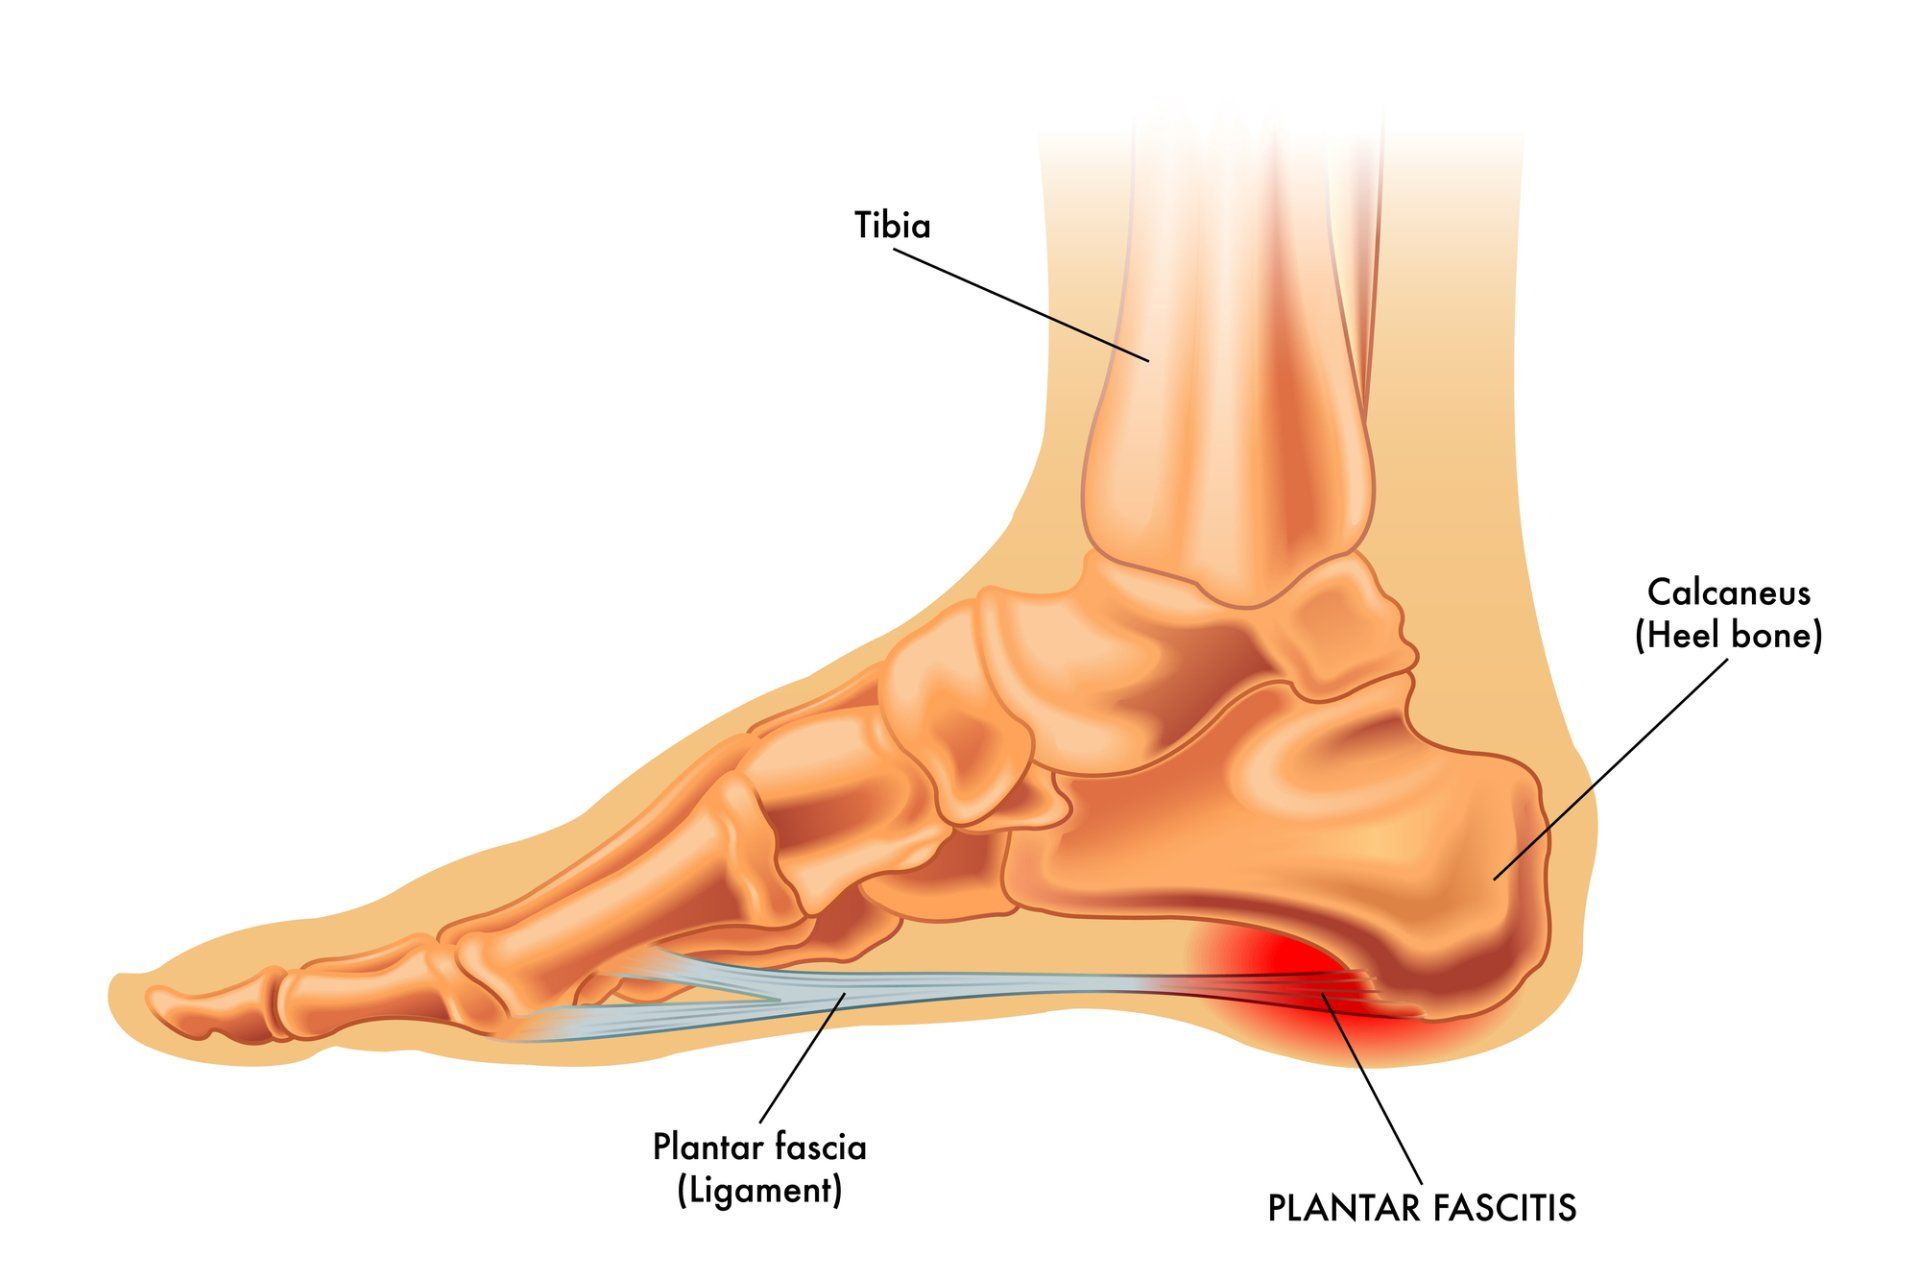 Treatment options for chronic Achilles tendon disorders